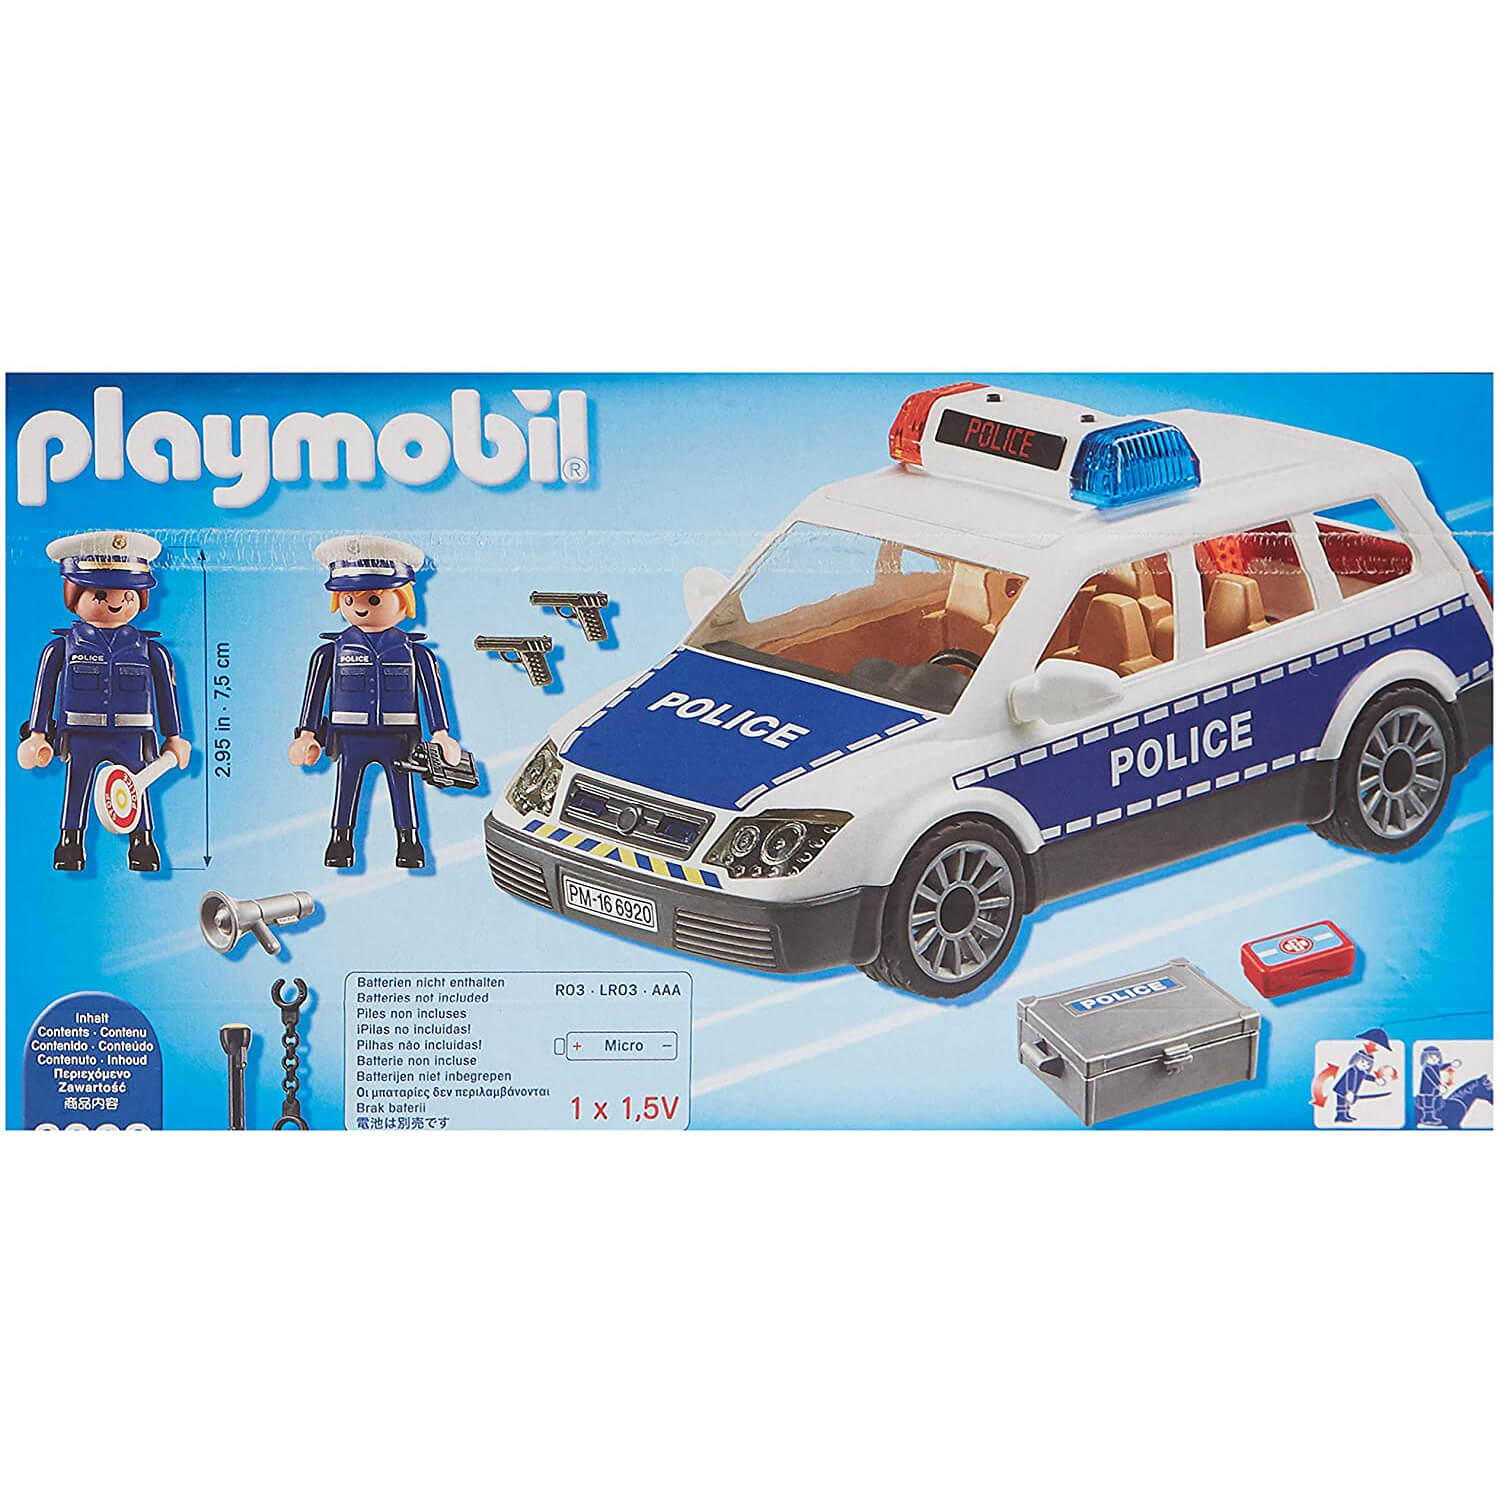 PLAYMOBIL Police Emergency Vehicle (6920)